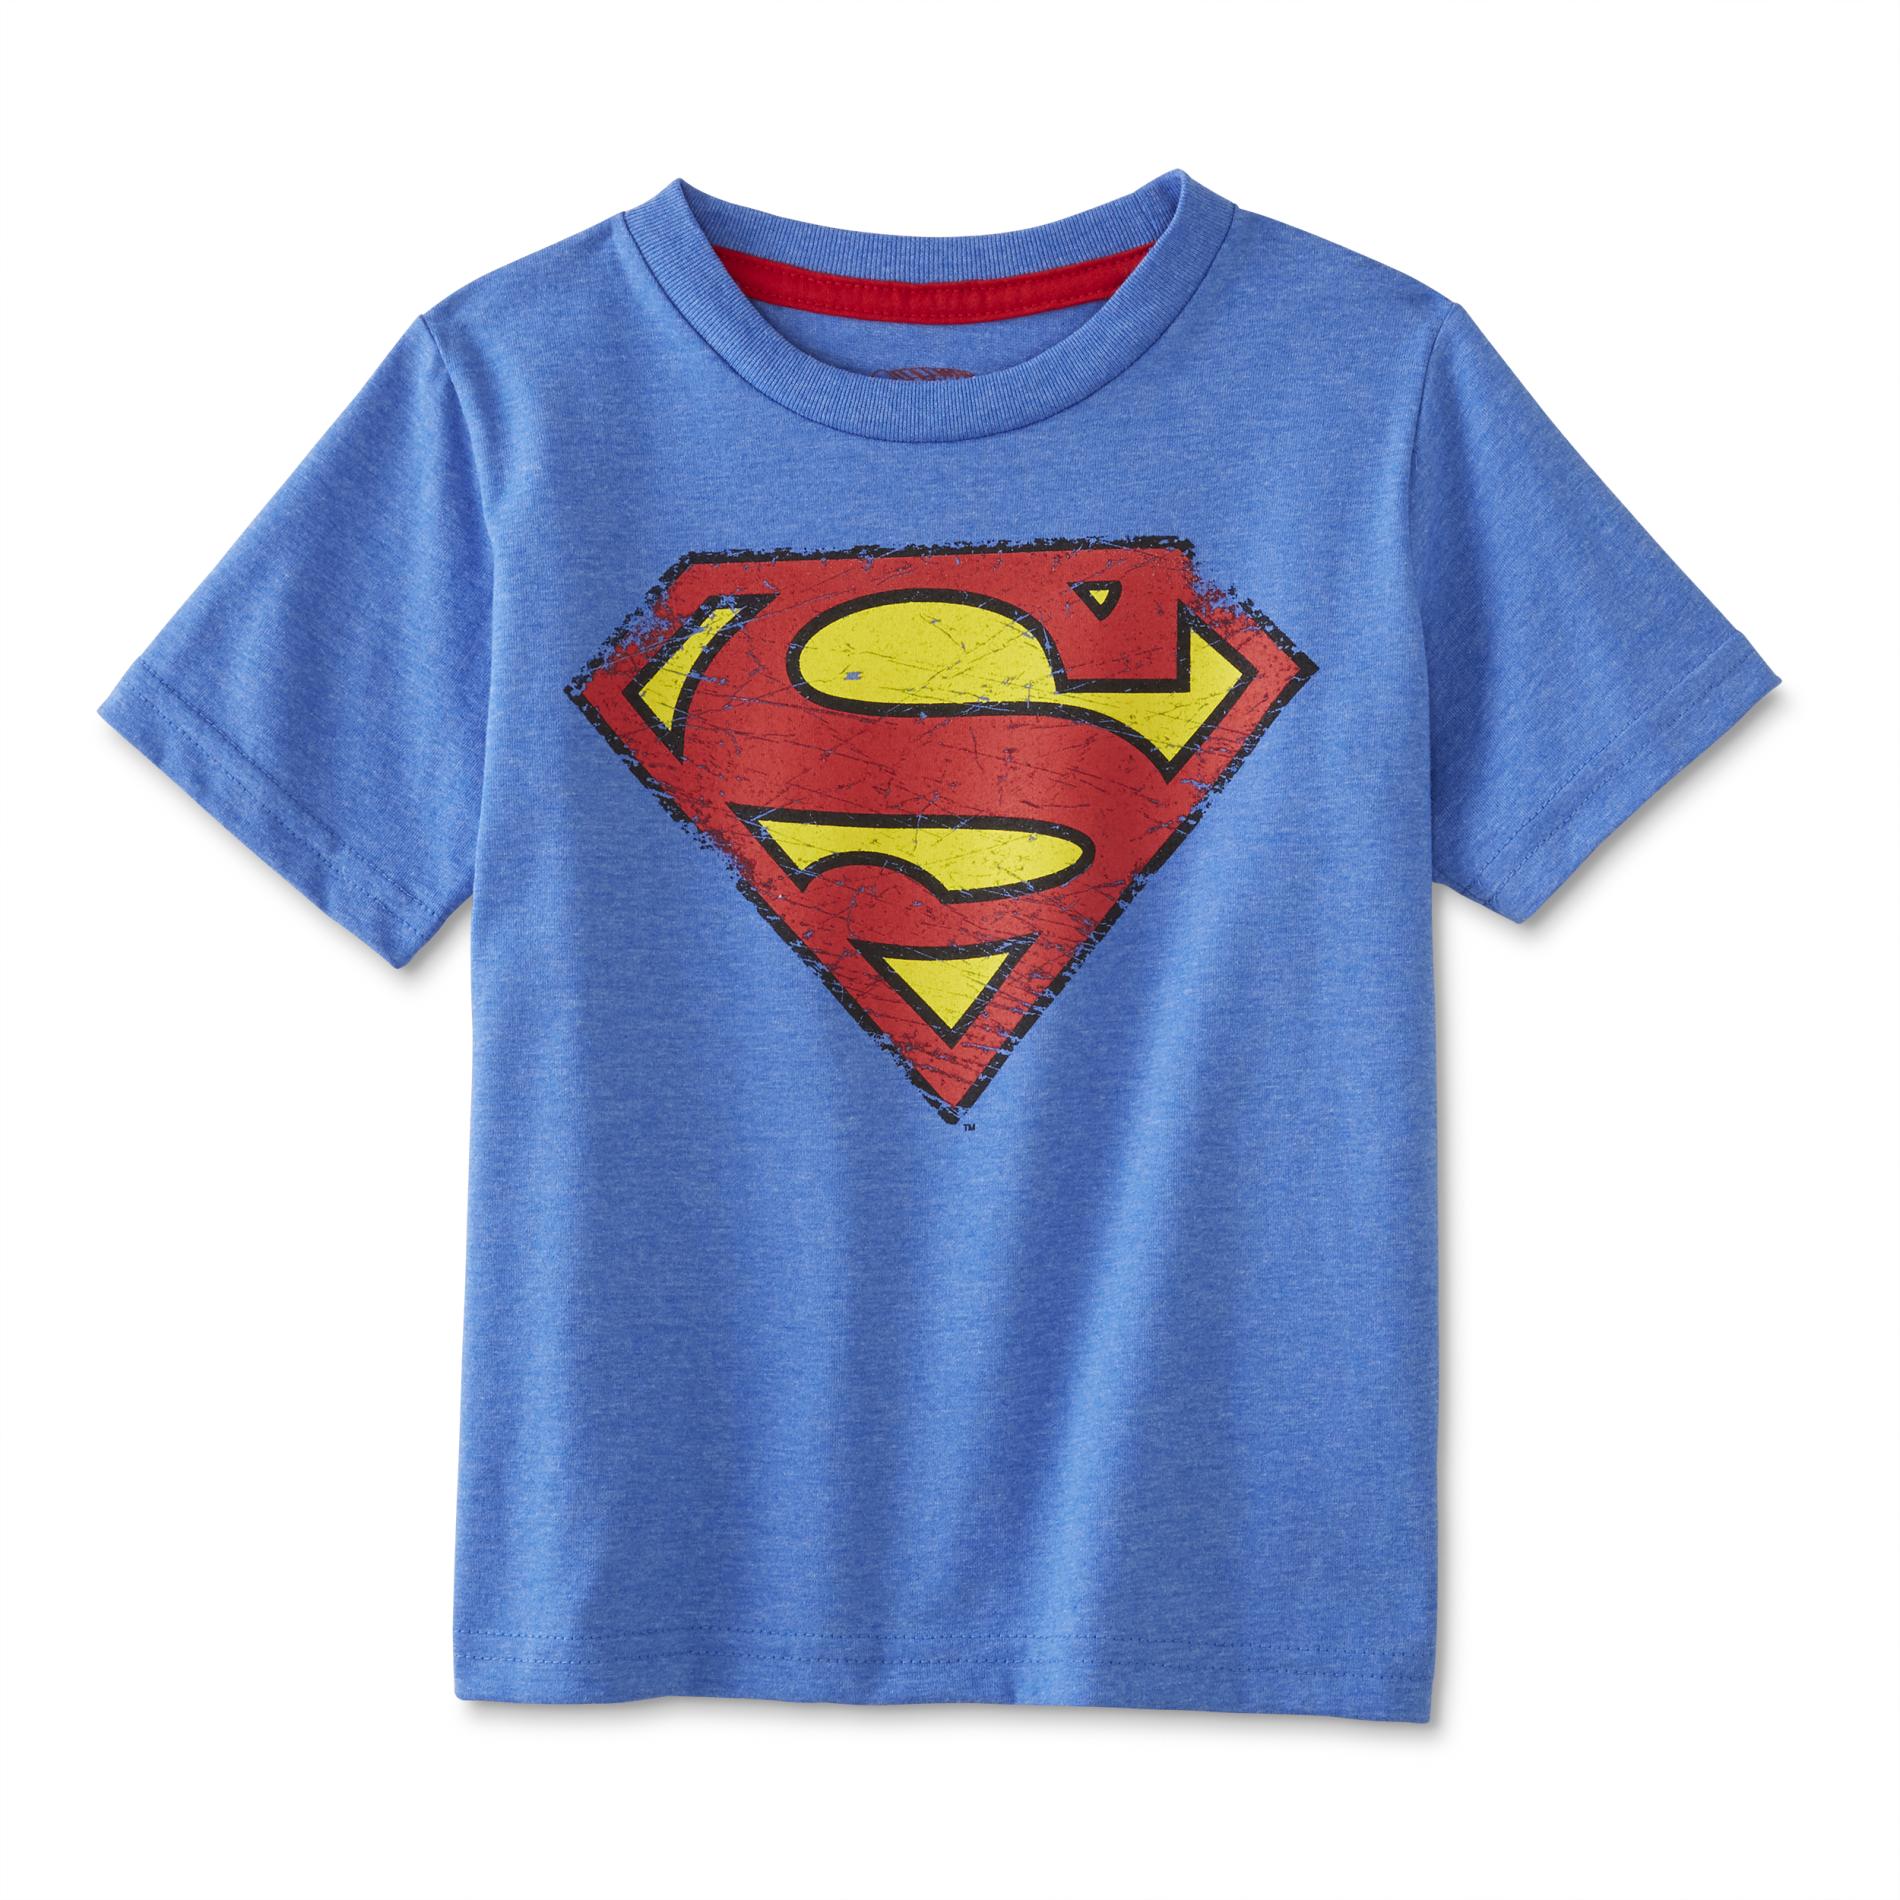 DC Comics Superman Toddler Boys' Graphic T-Shirt - Emblem